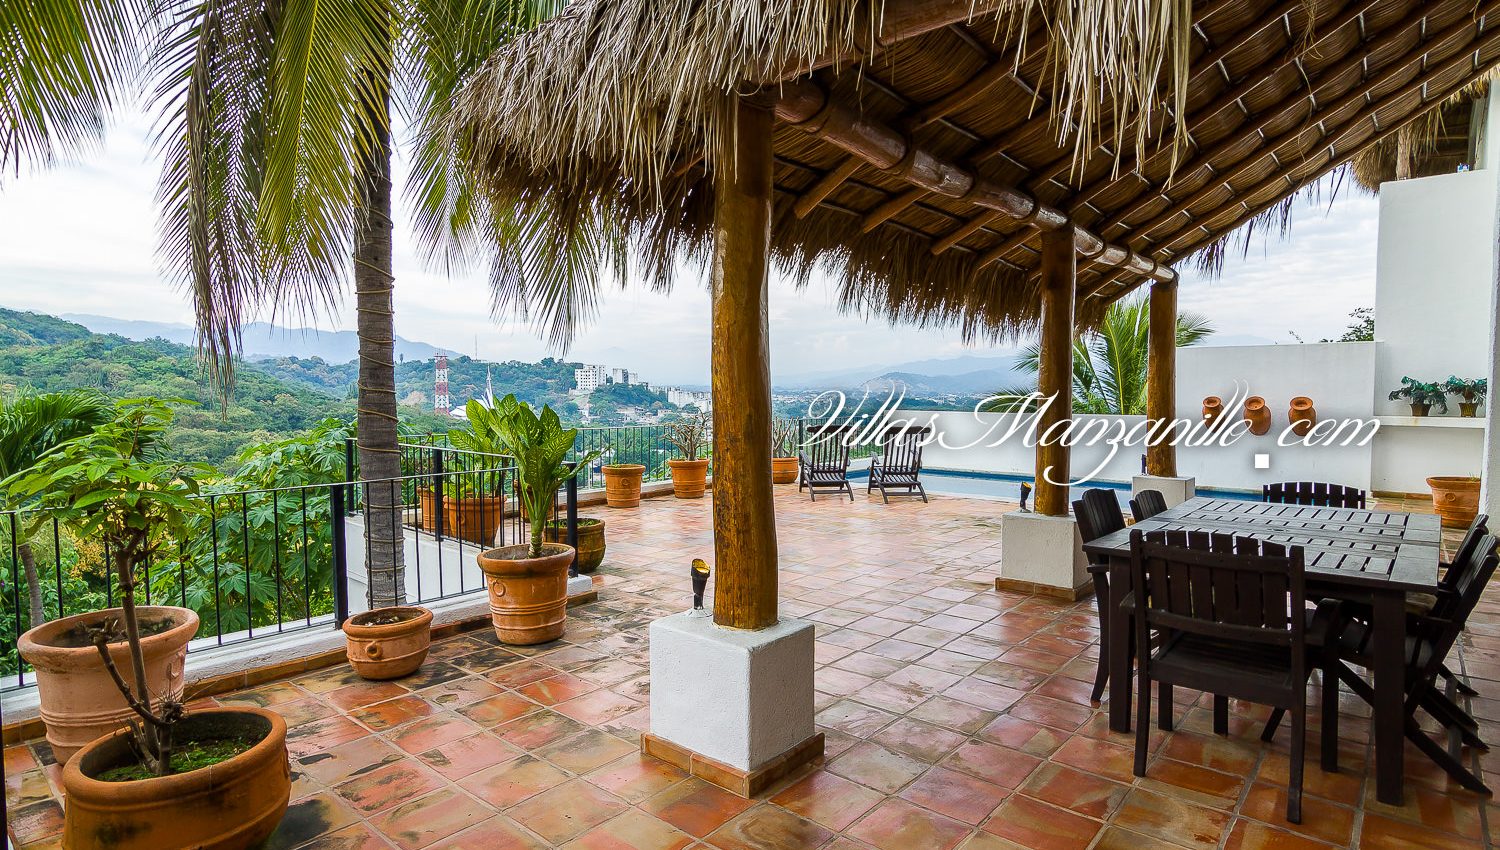 Se renta for rent Villa San Felipe Las Hadas Manzanillo Colima Mexico-15